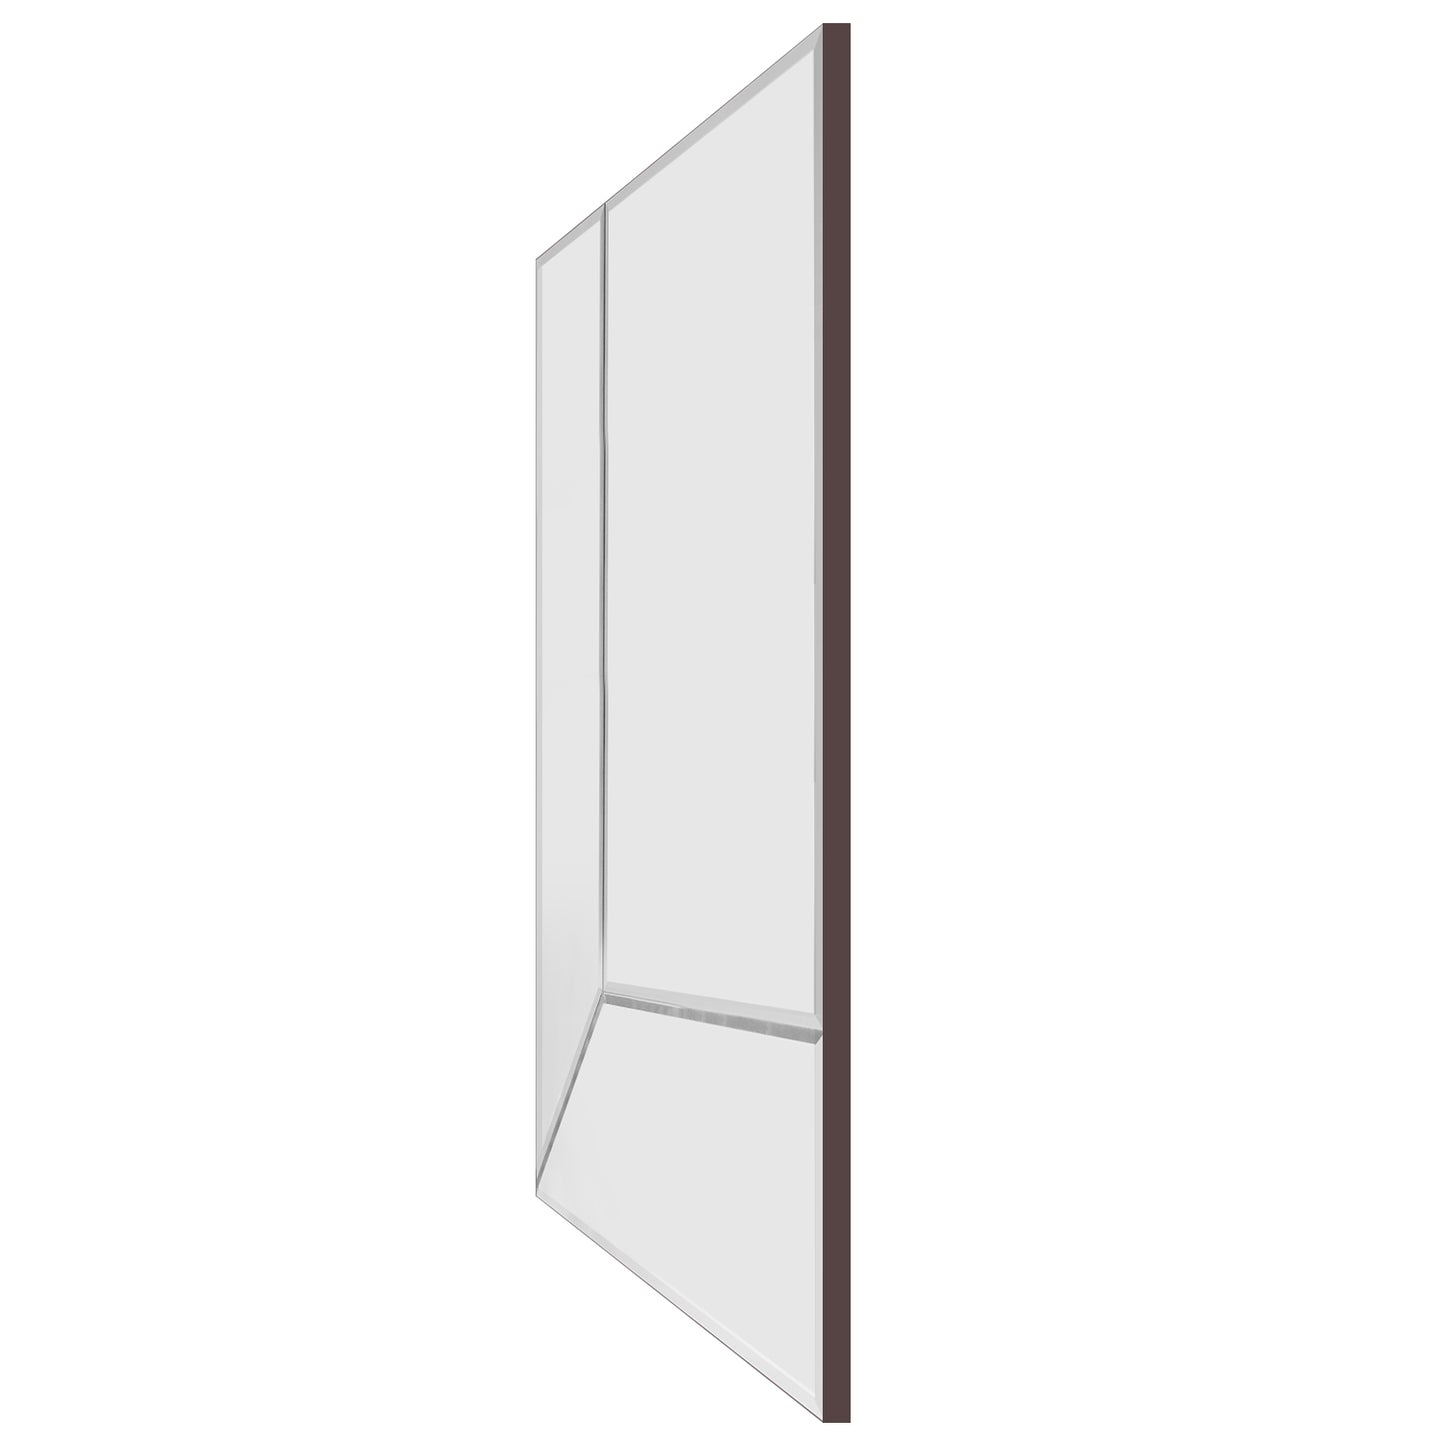 Reversible Rectangle XL - Mirror - 60 x 90 cm - Reversible - Beveled Mirror - Contemporary Wall Art